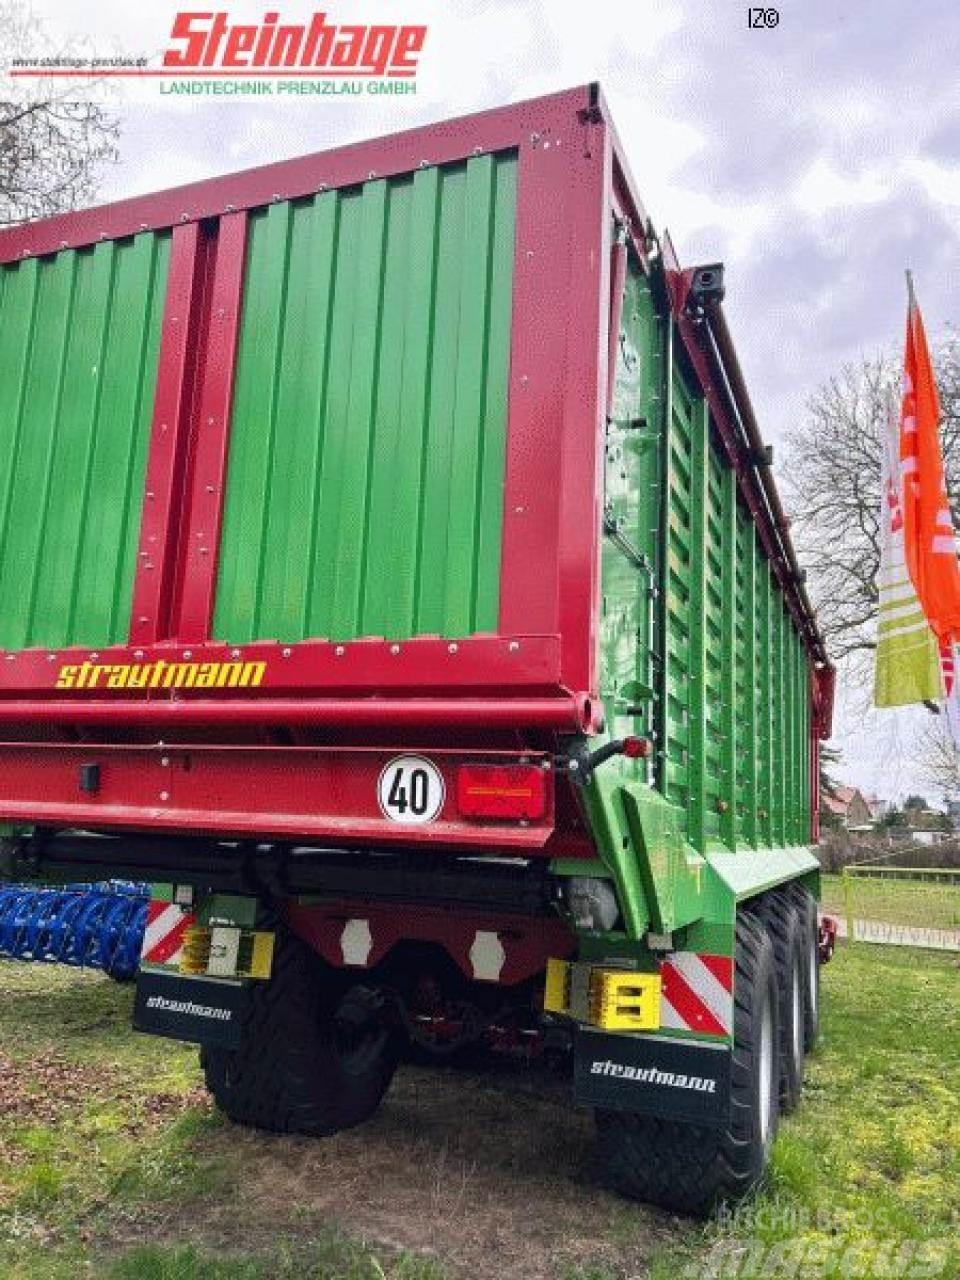 Strautmann Magnon CFS Self loading trailers